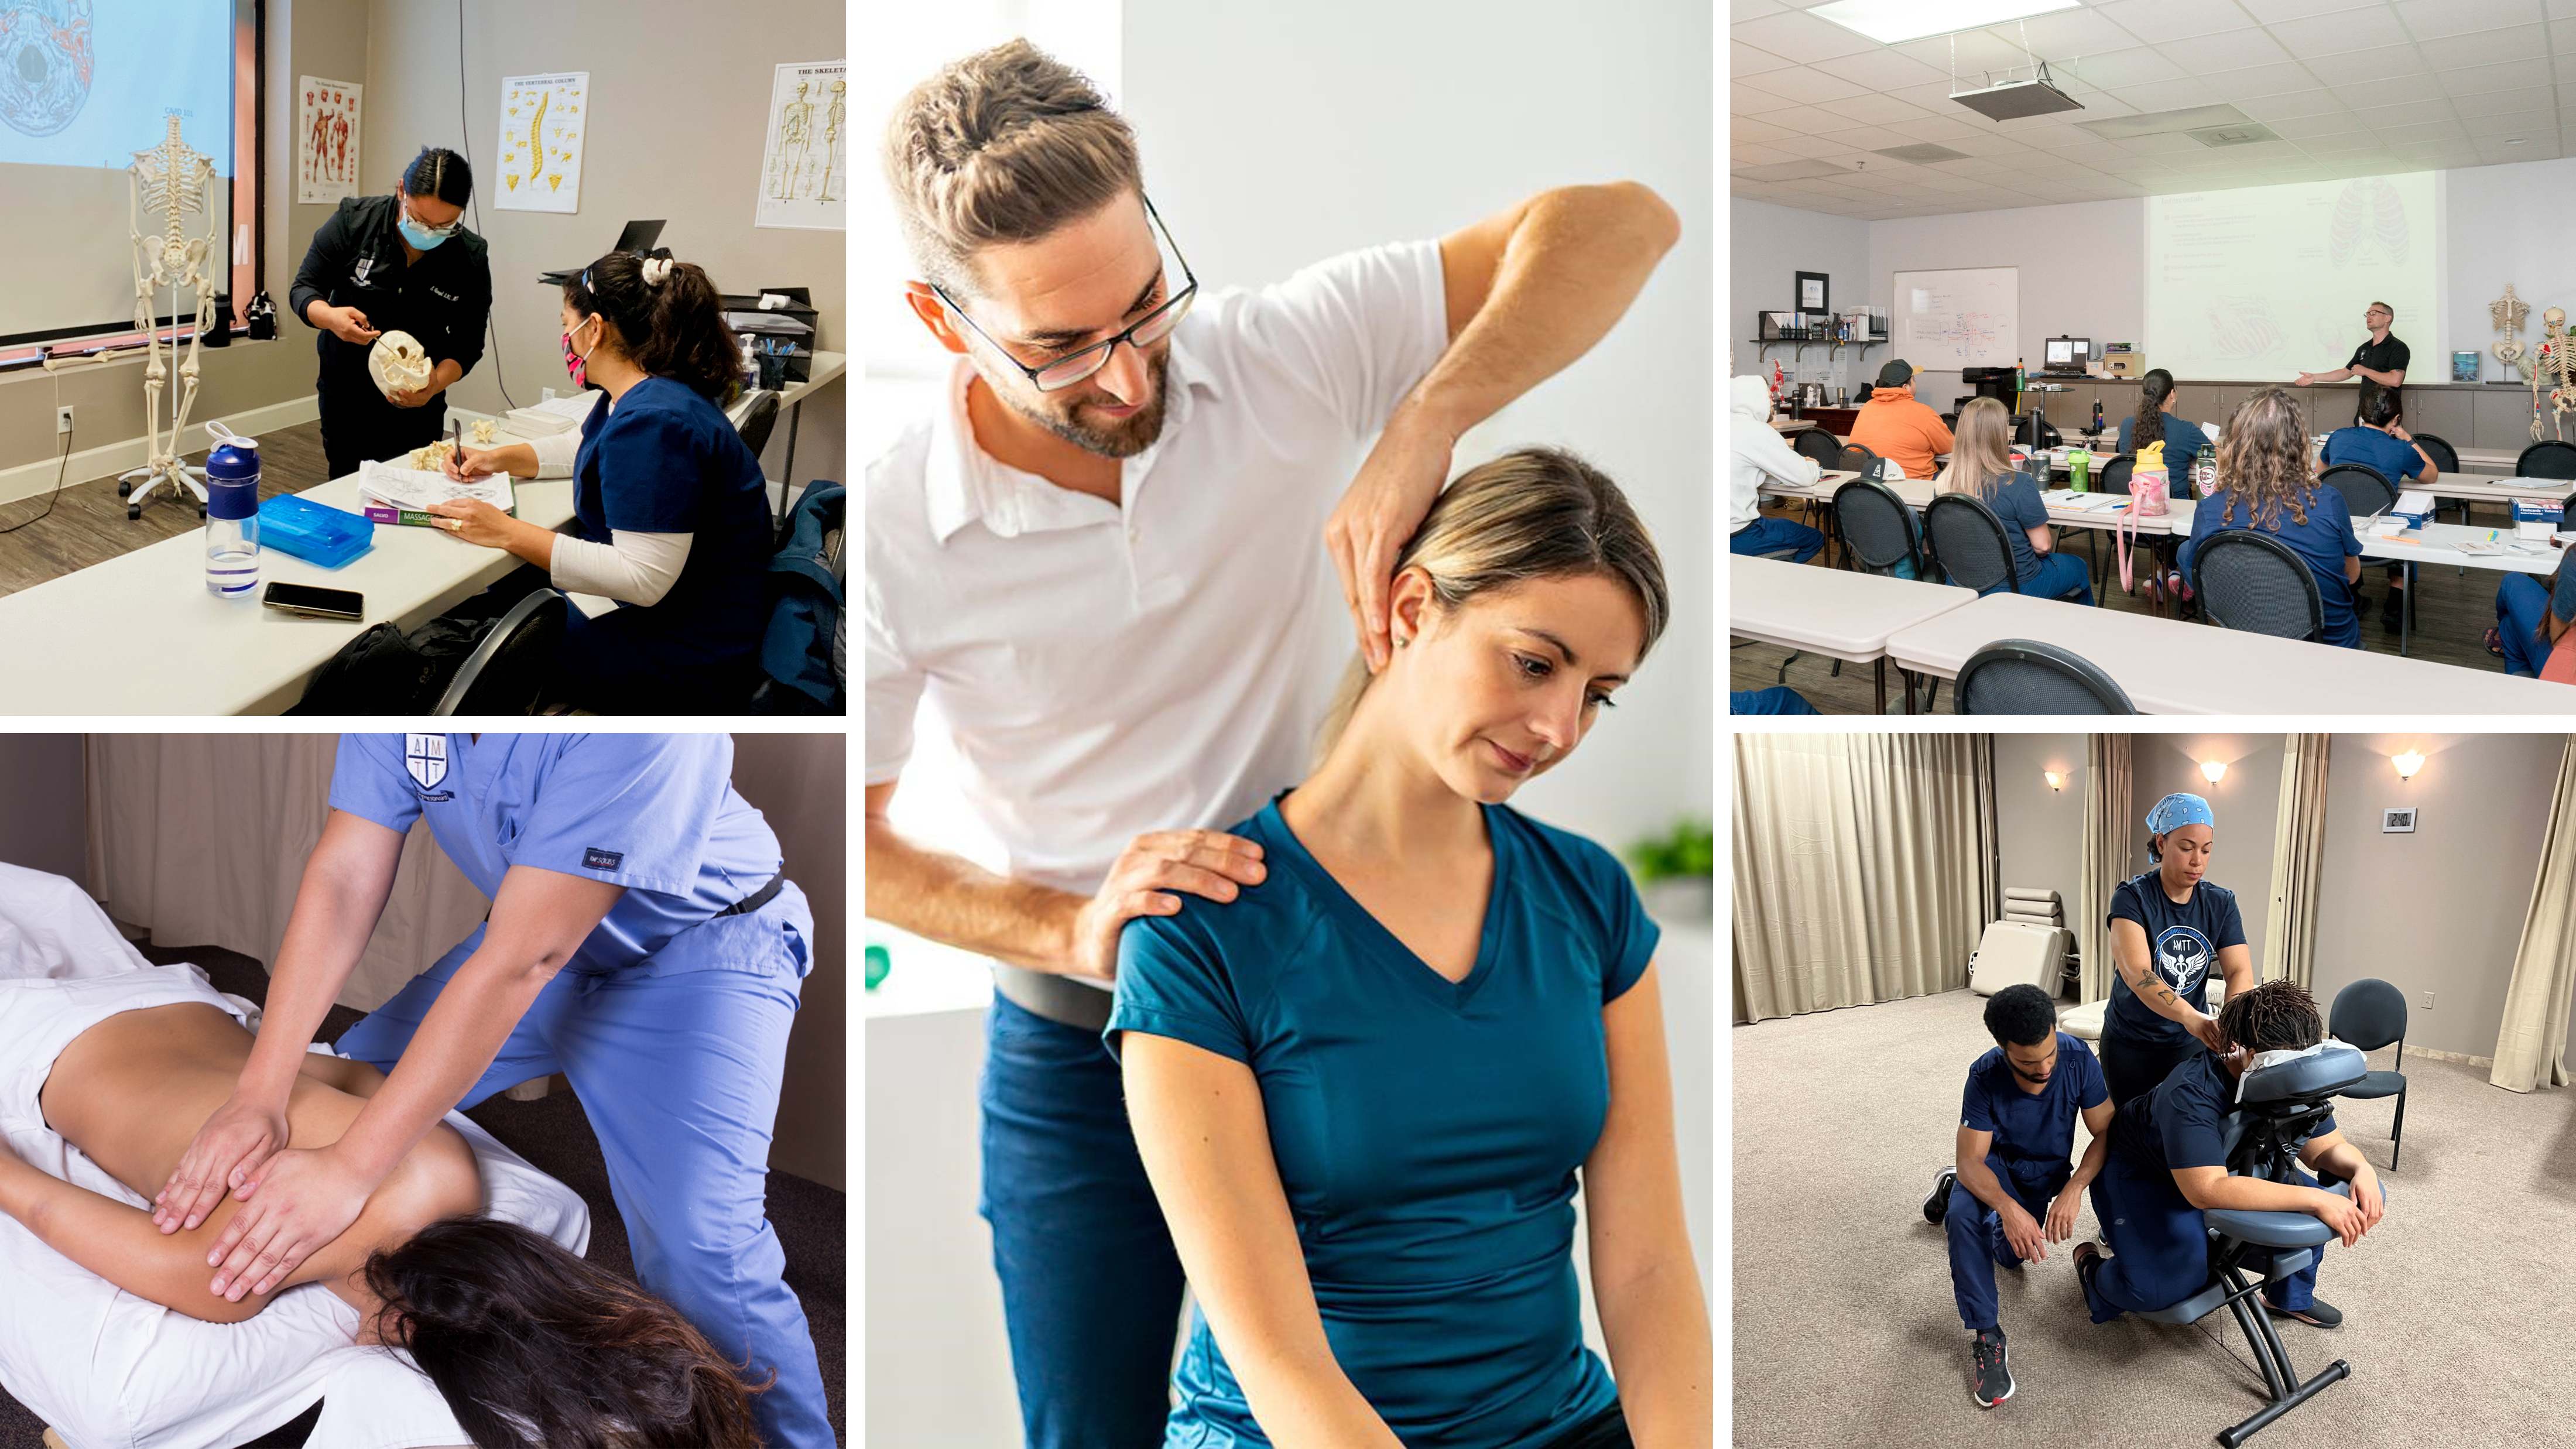 Education & training for massage mastery